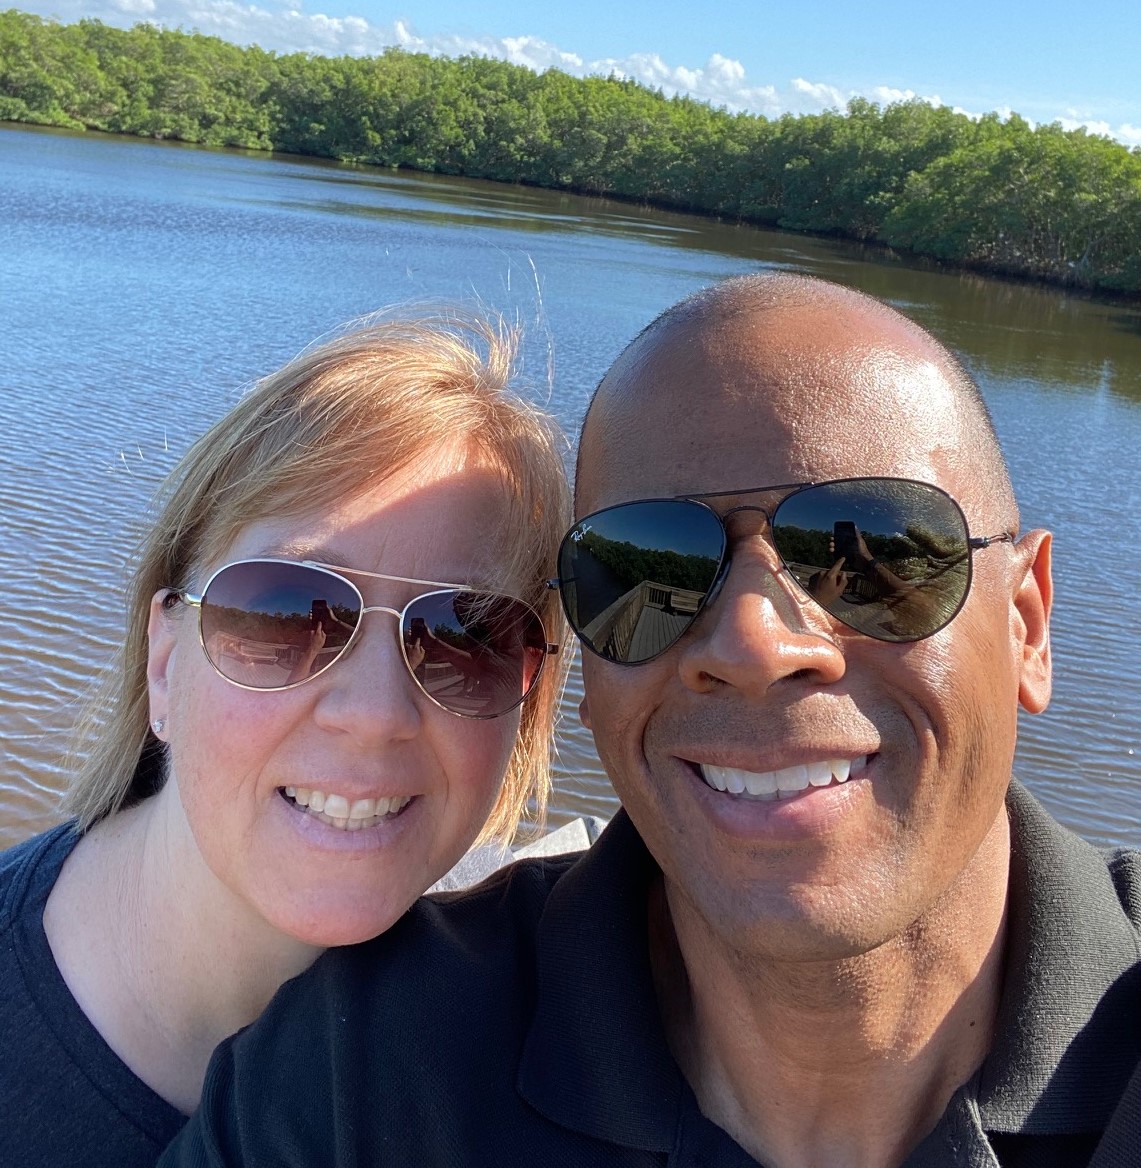 Patrick Nana Sinkam and his wife take a selfie near a lake